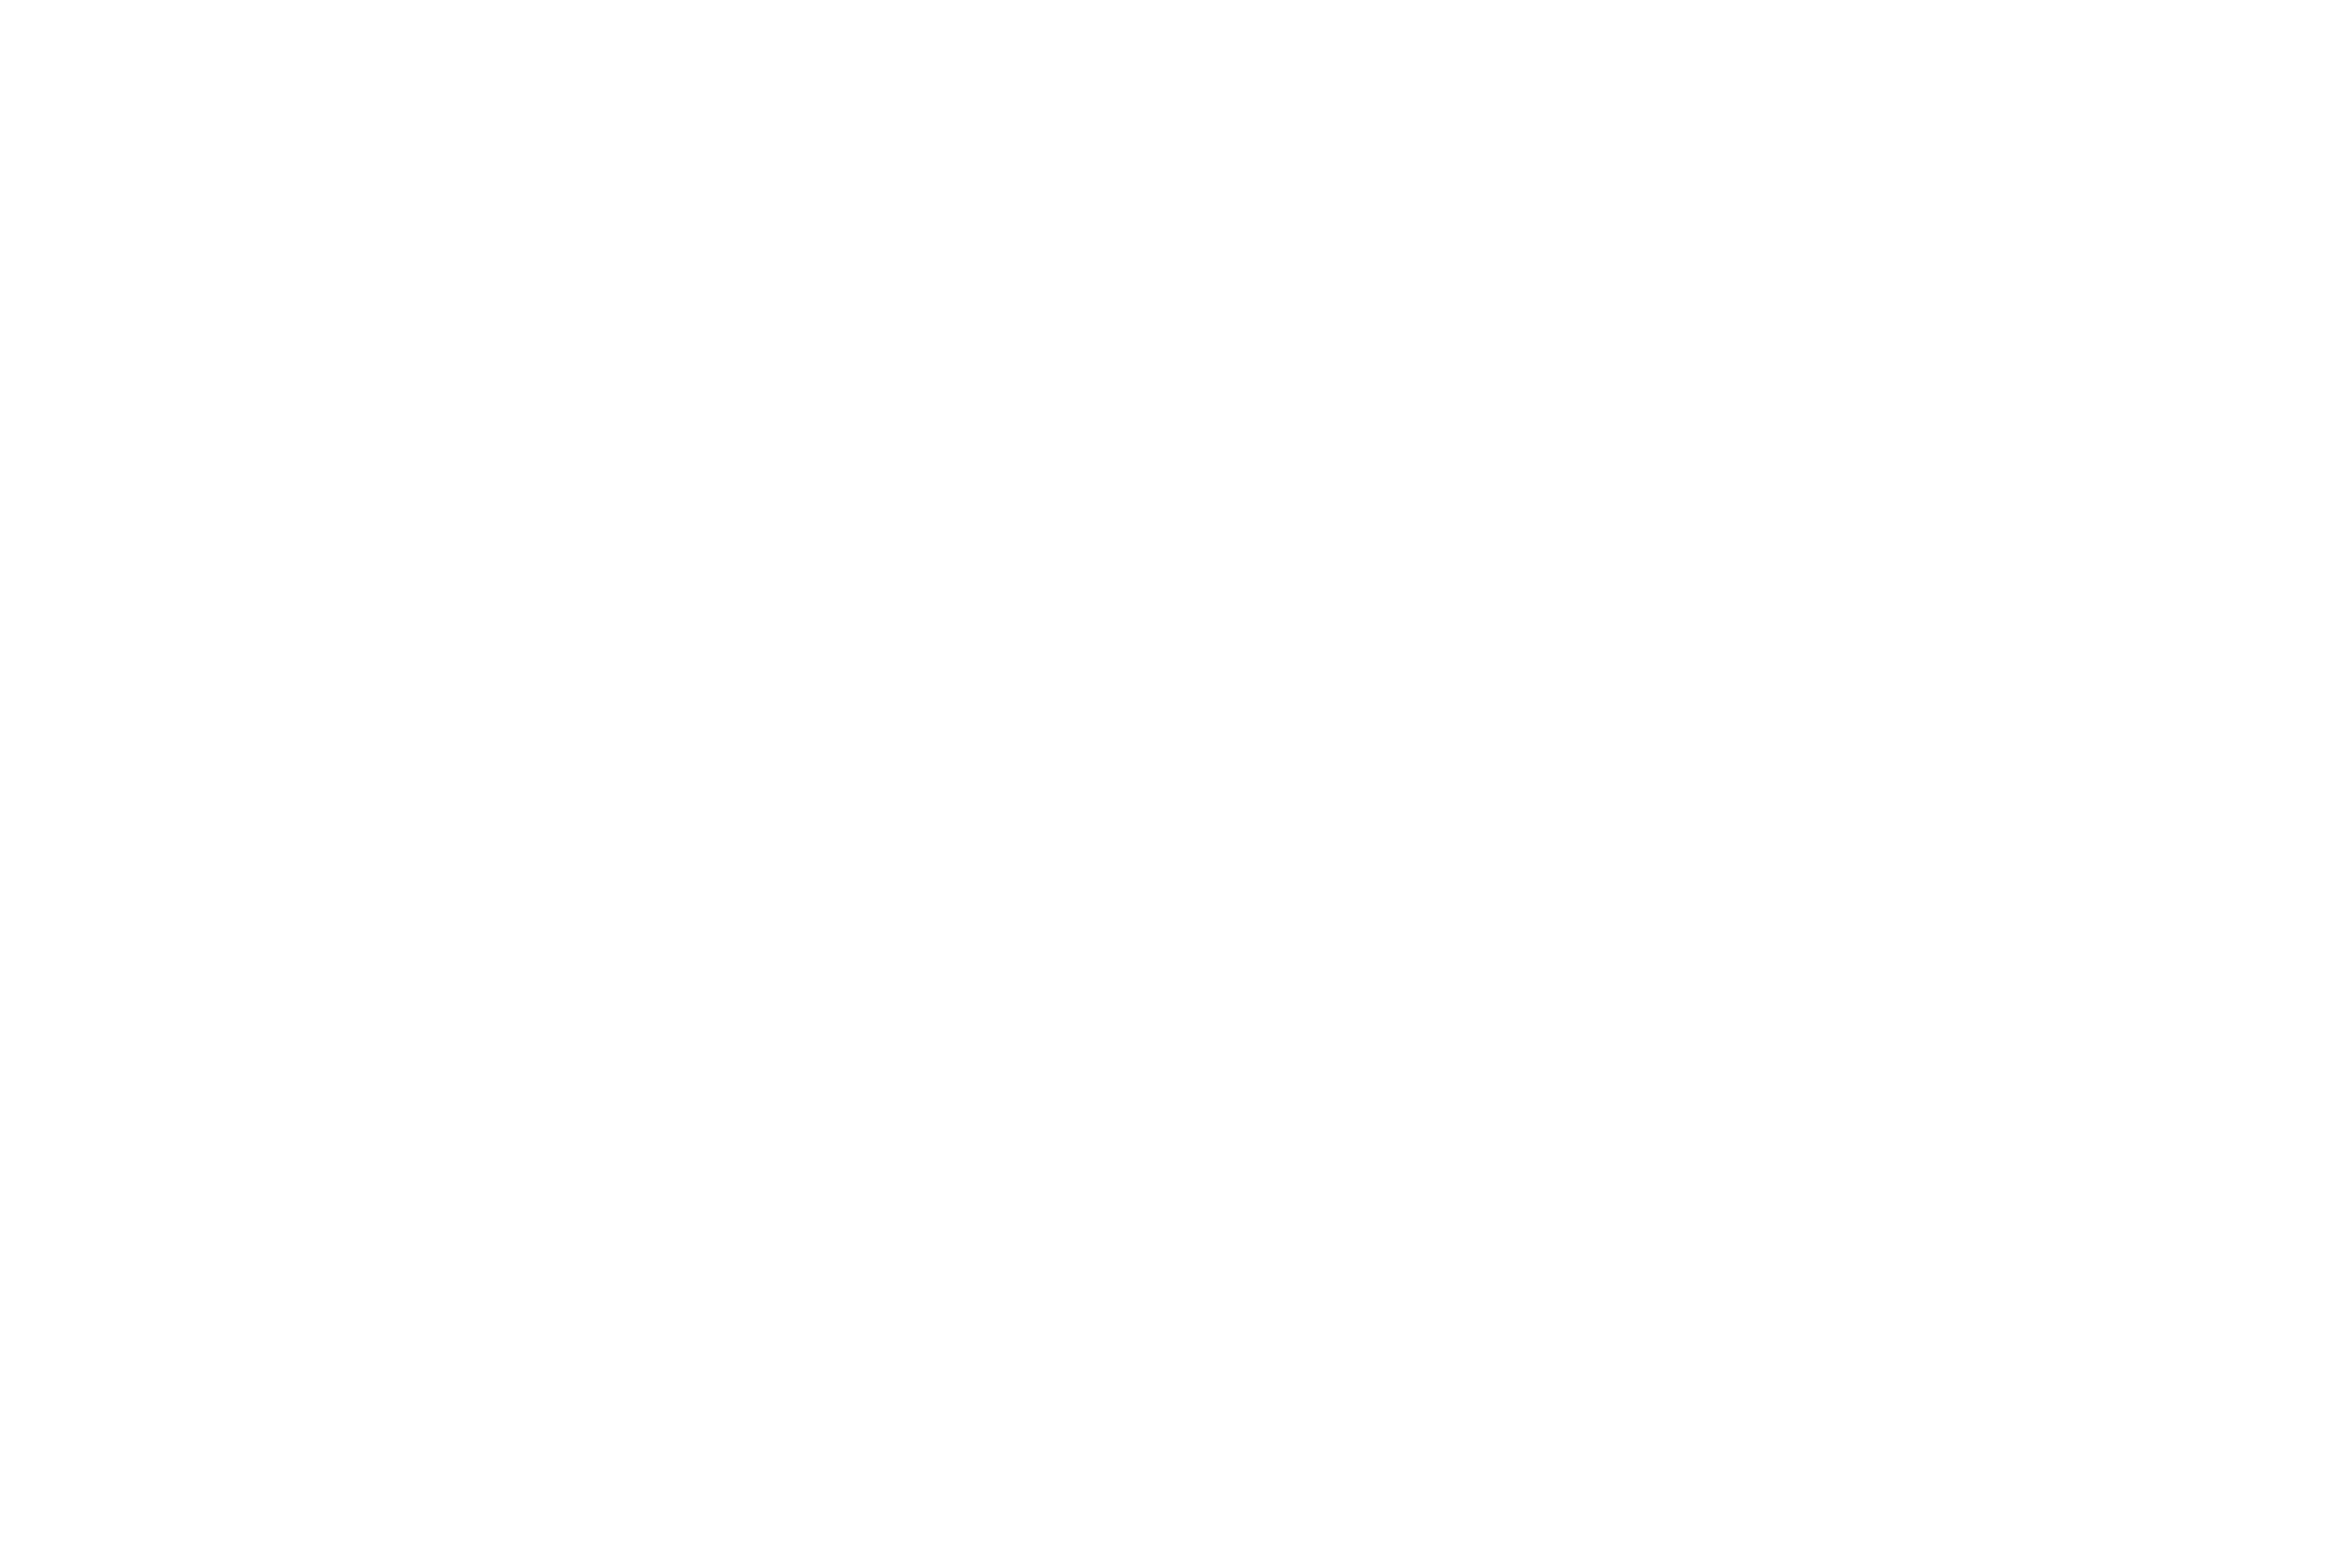 JACOB CLAUDE PHOTOGRAPHY